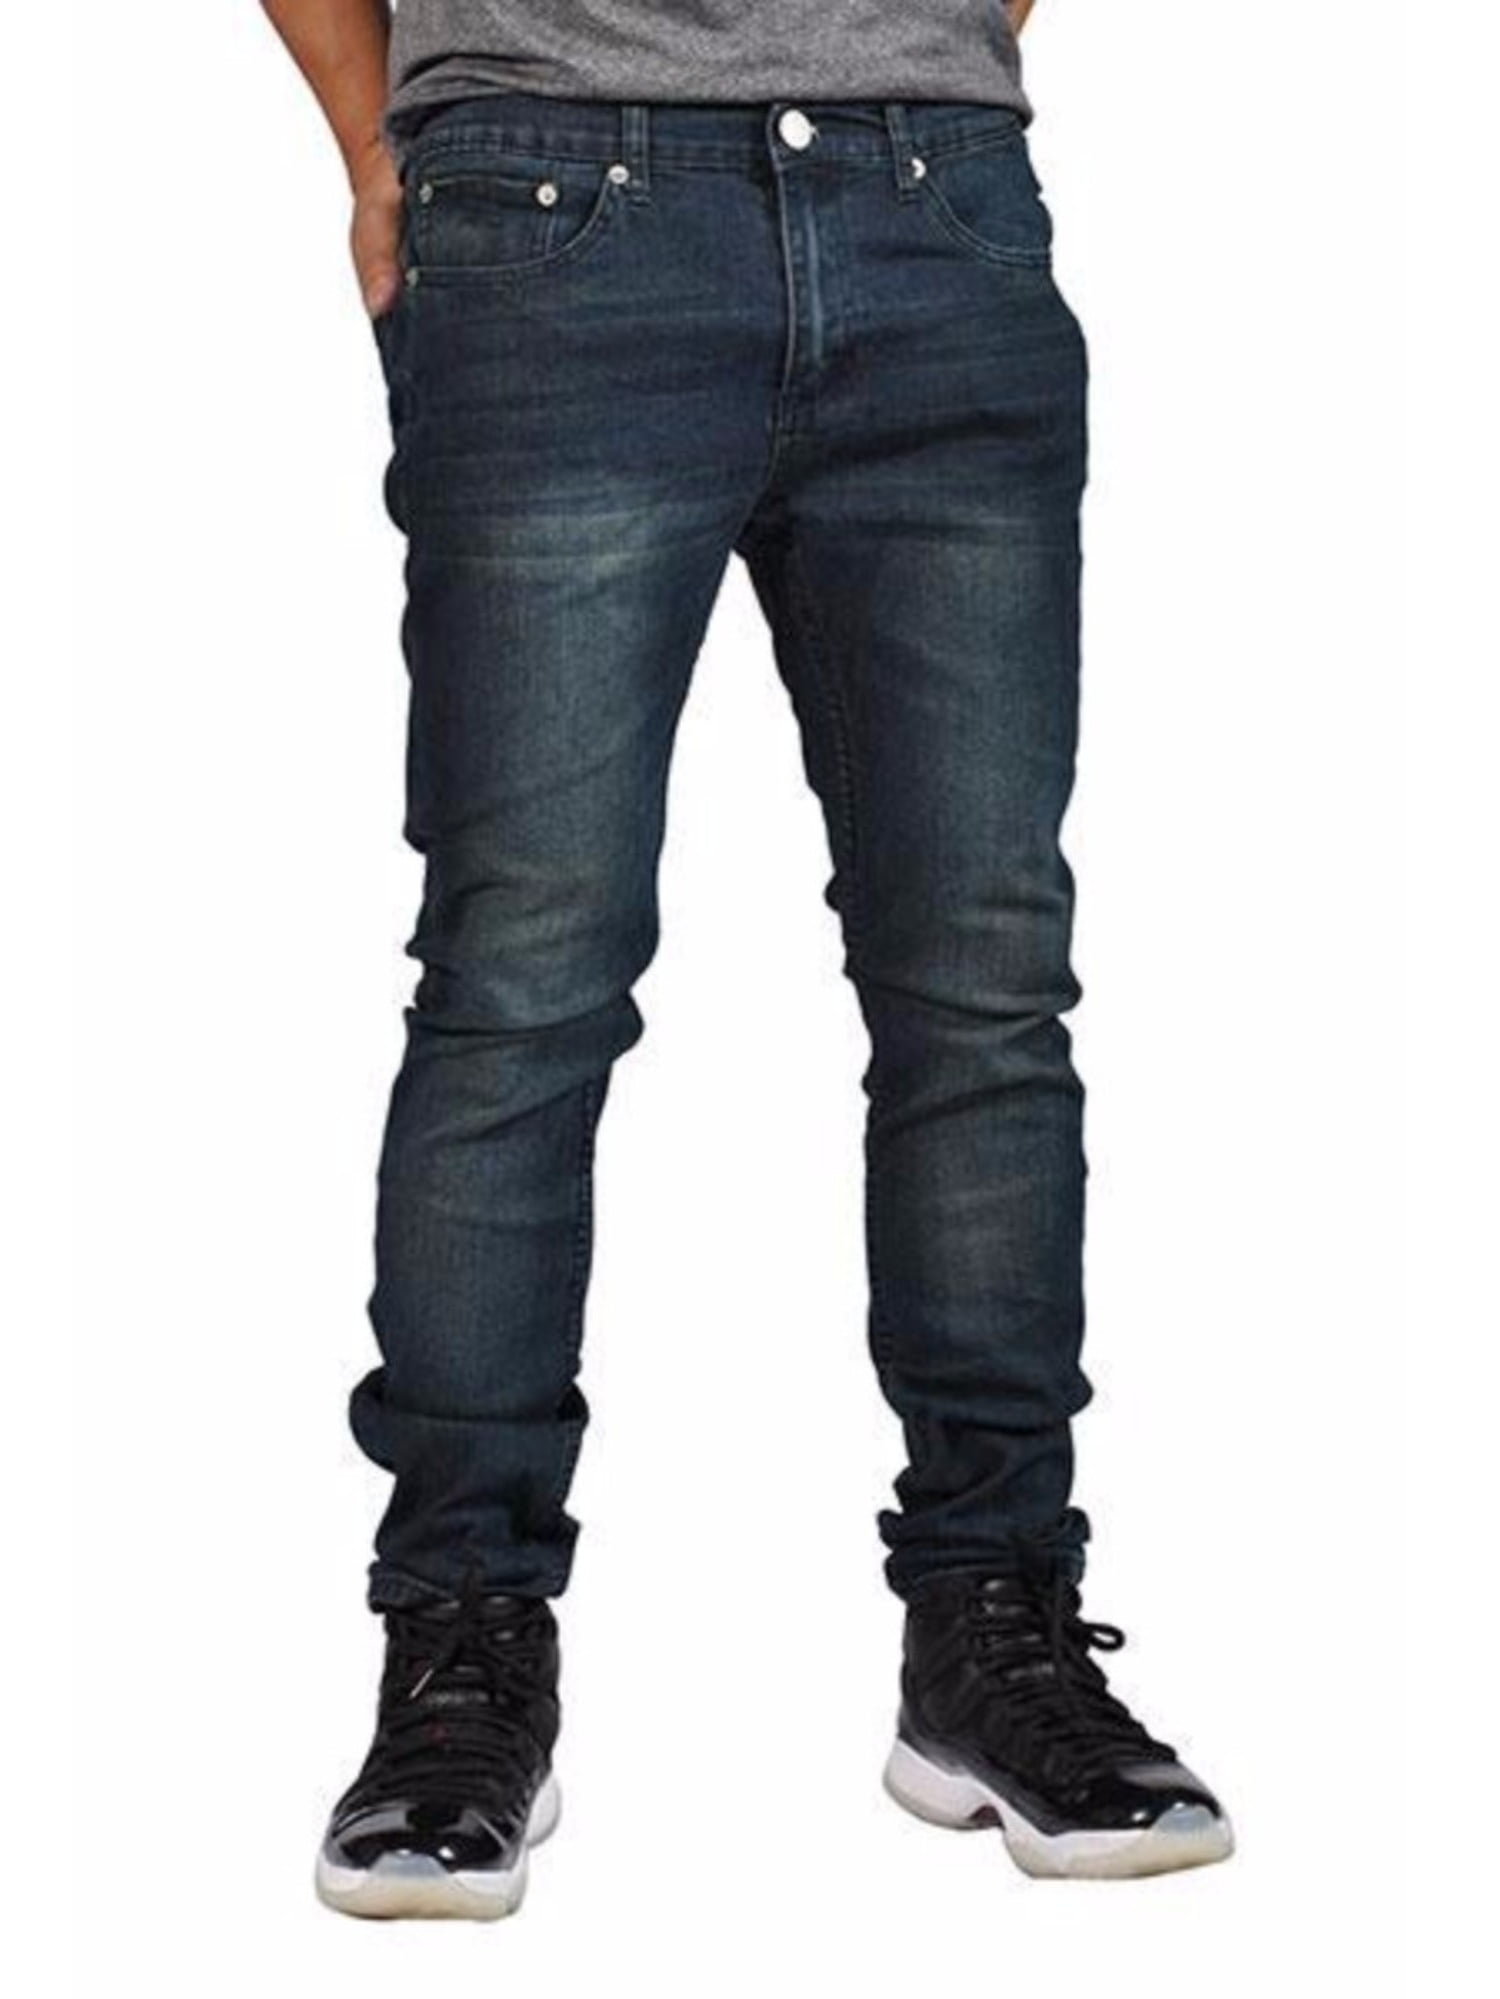 Indigo People Men's Denim Jeans Skinny Fit Tapered Leg 28023 Blue 32x32 ...